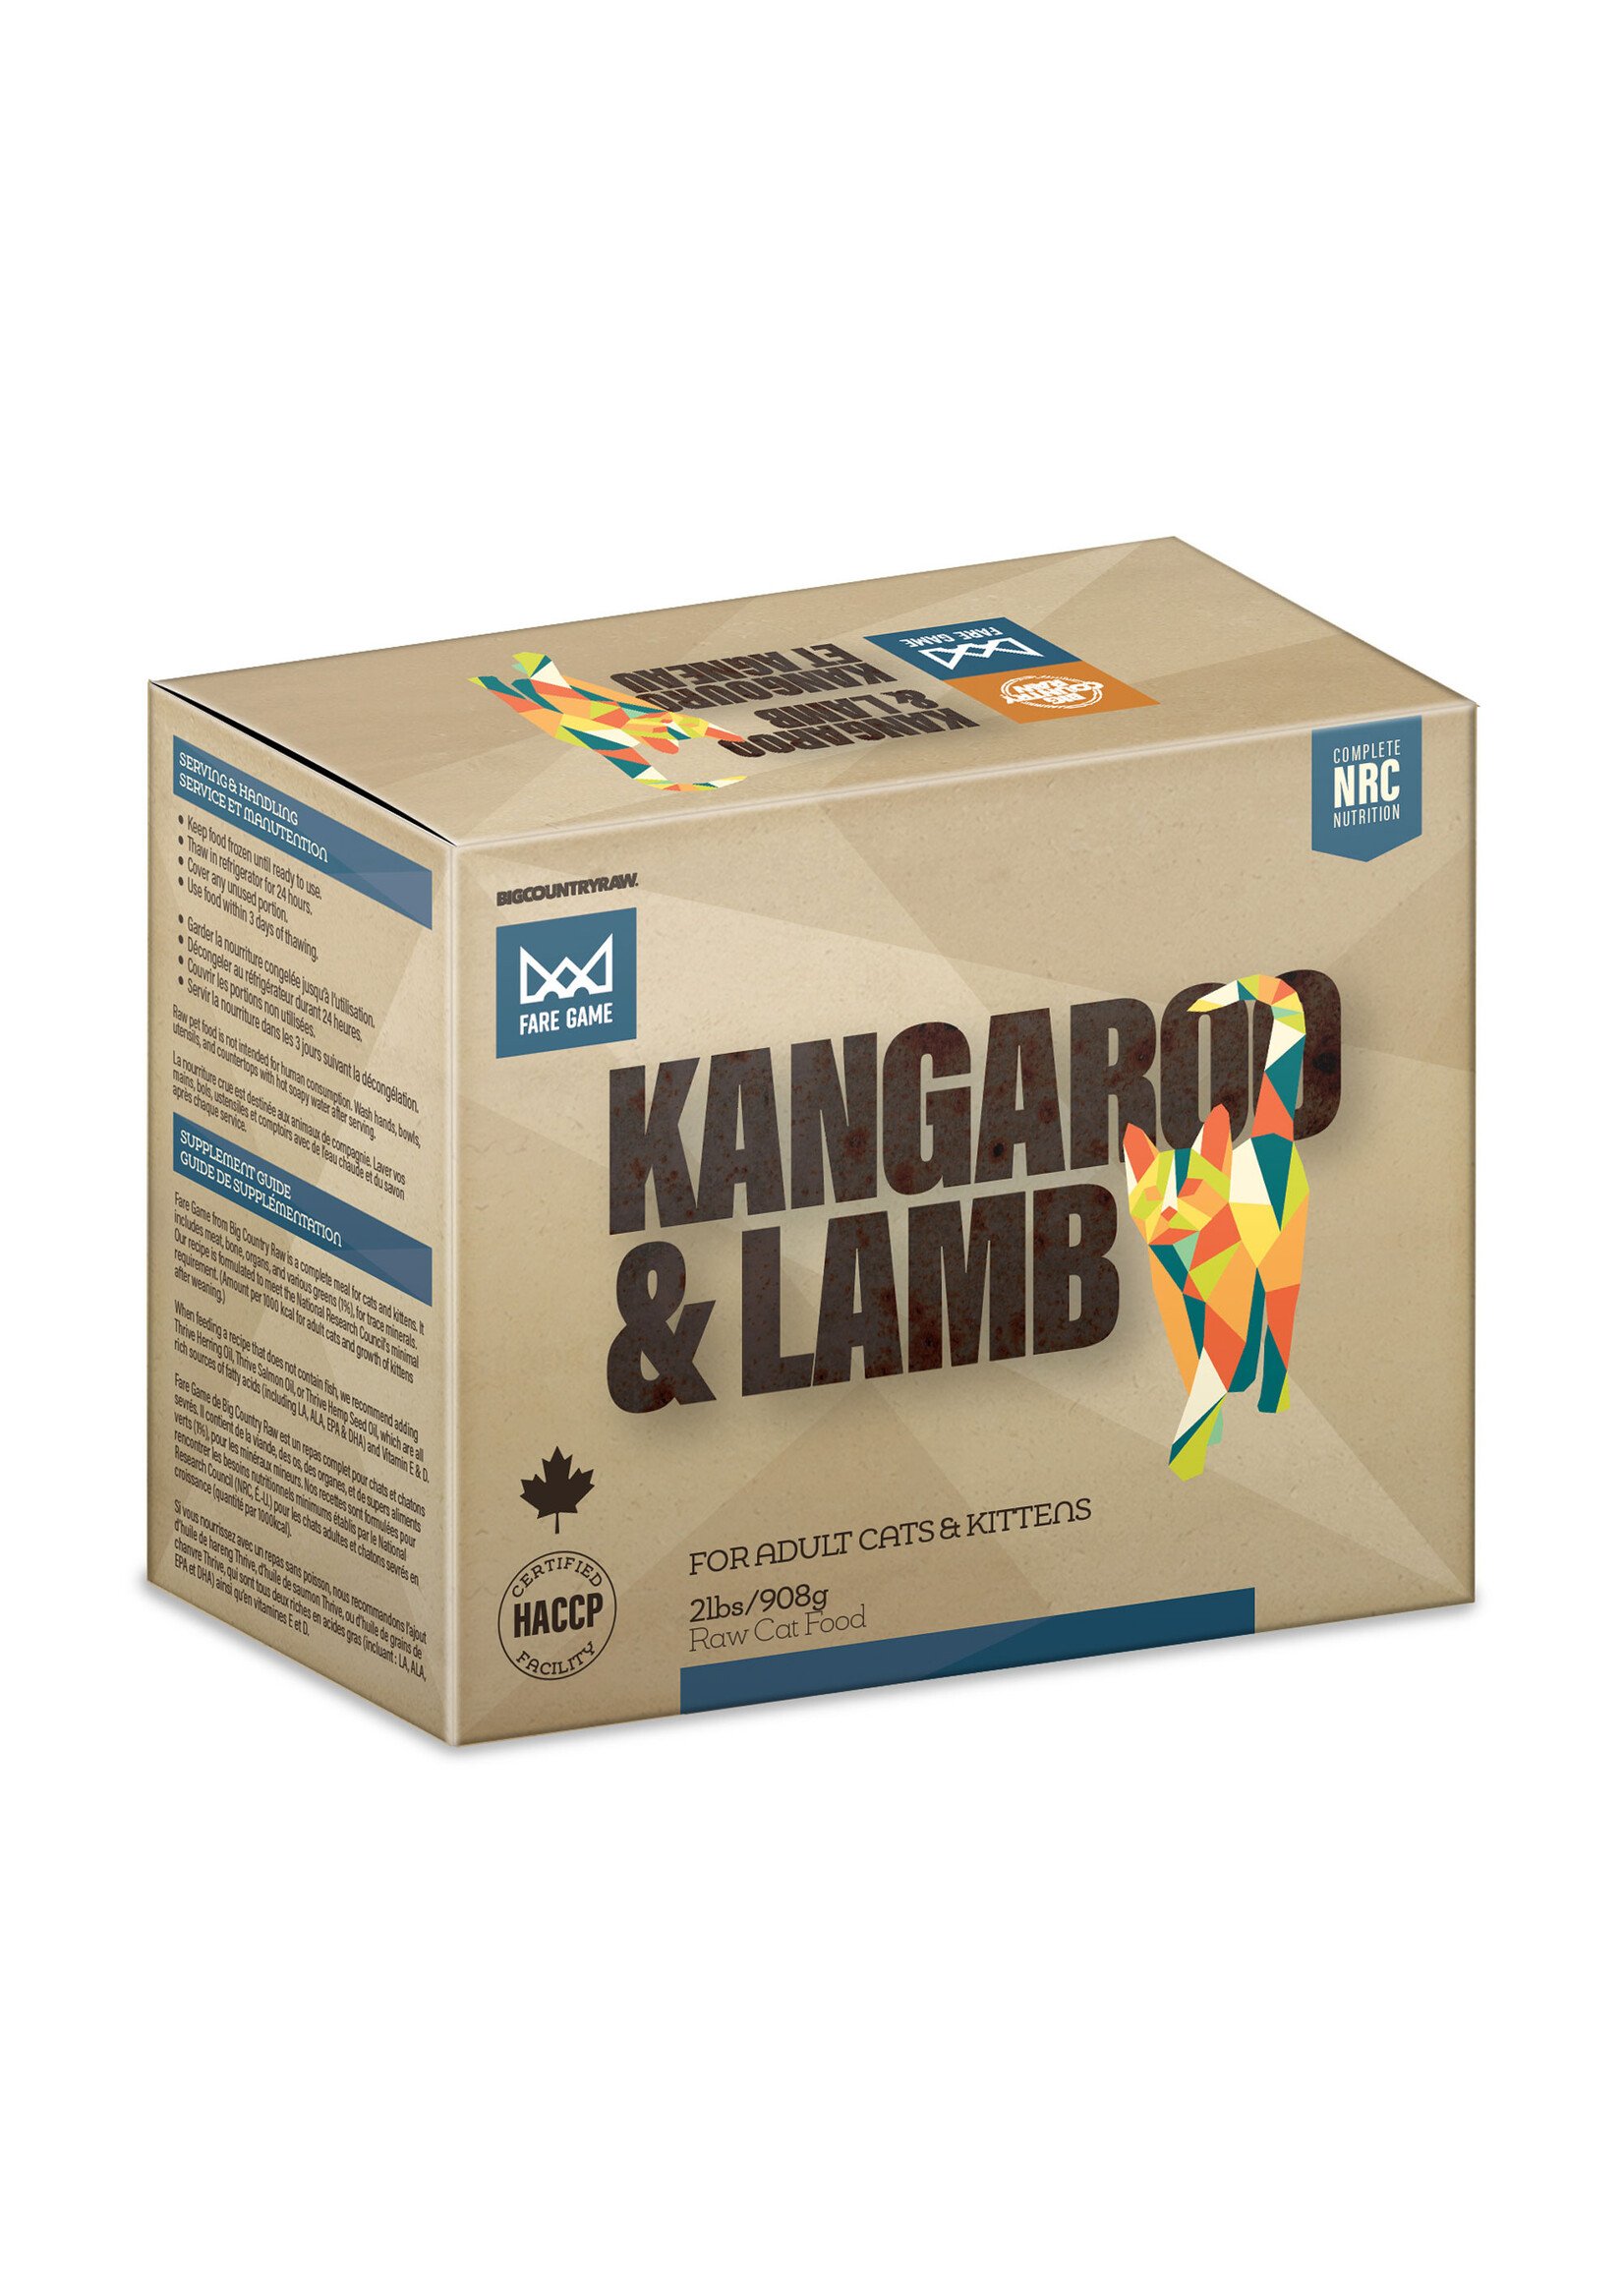 Big Country Raw Ltd. Big Country Raw Fare Game Kangaroo & Lamb - 2lb